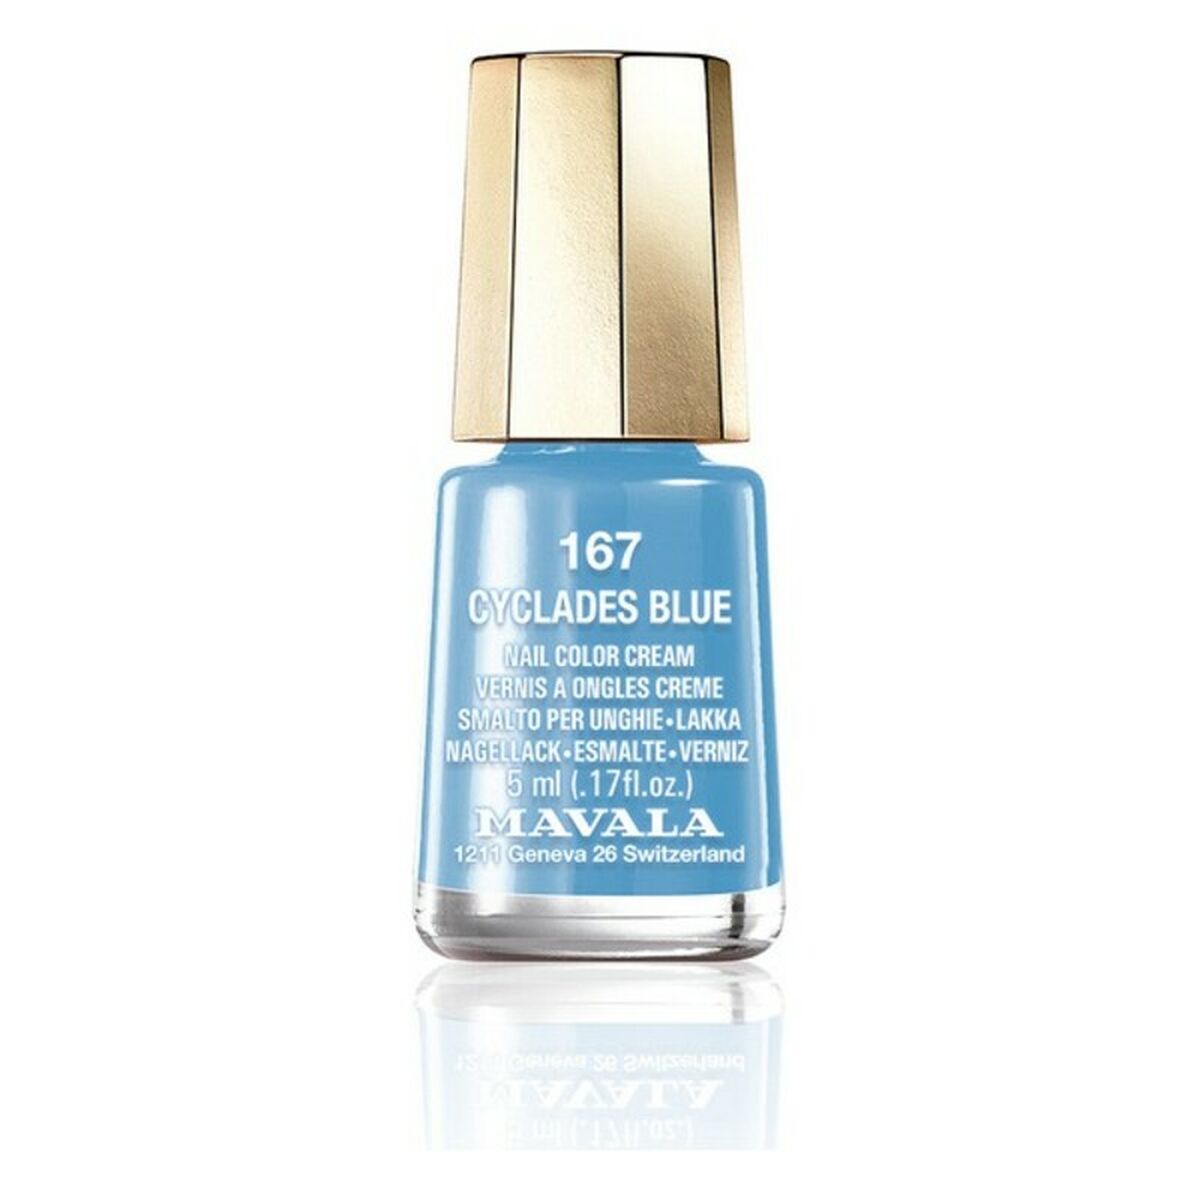 Nagellack Mavala Nail Color Cream 167-cyclades blue (5 ml)